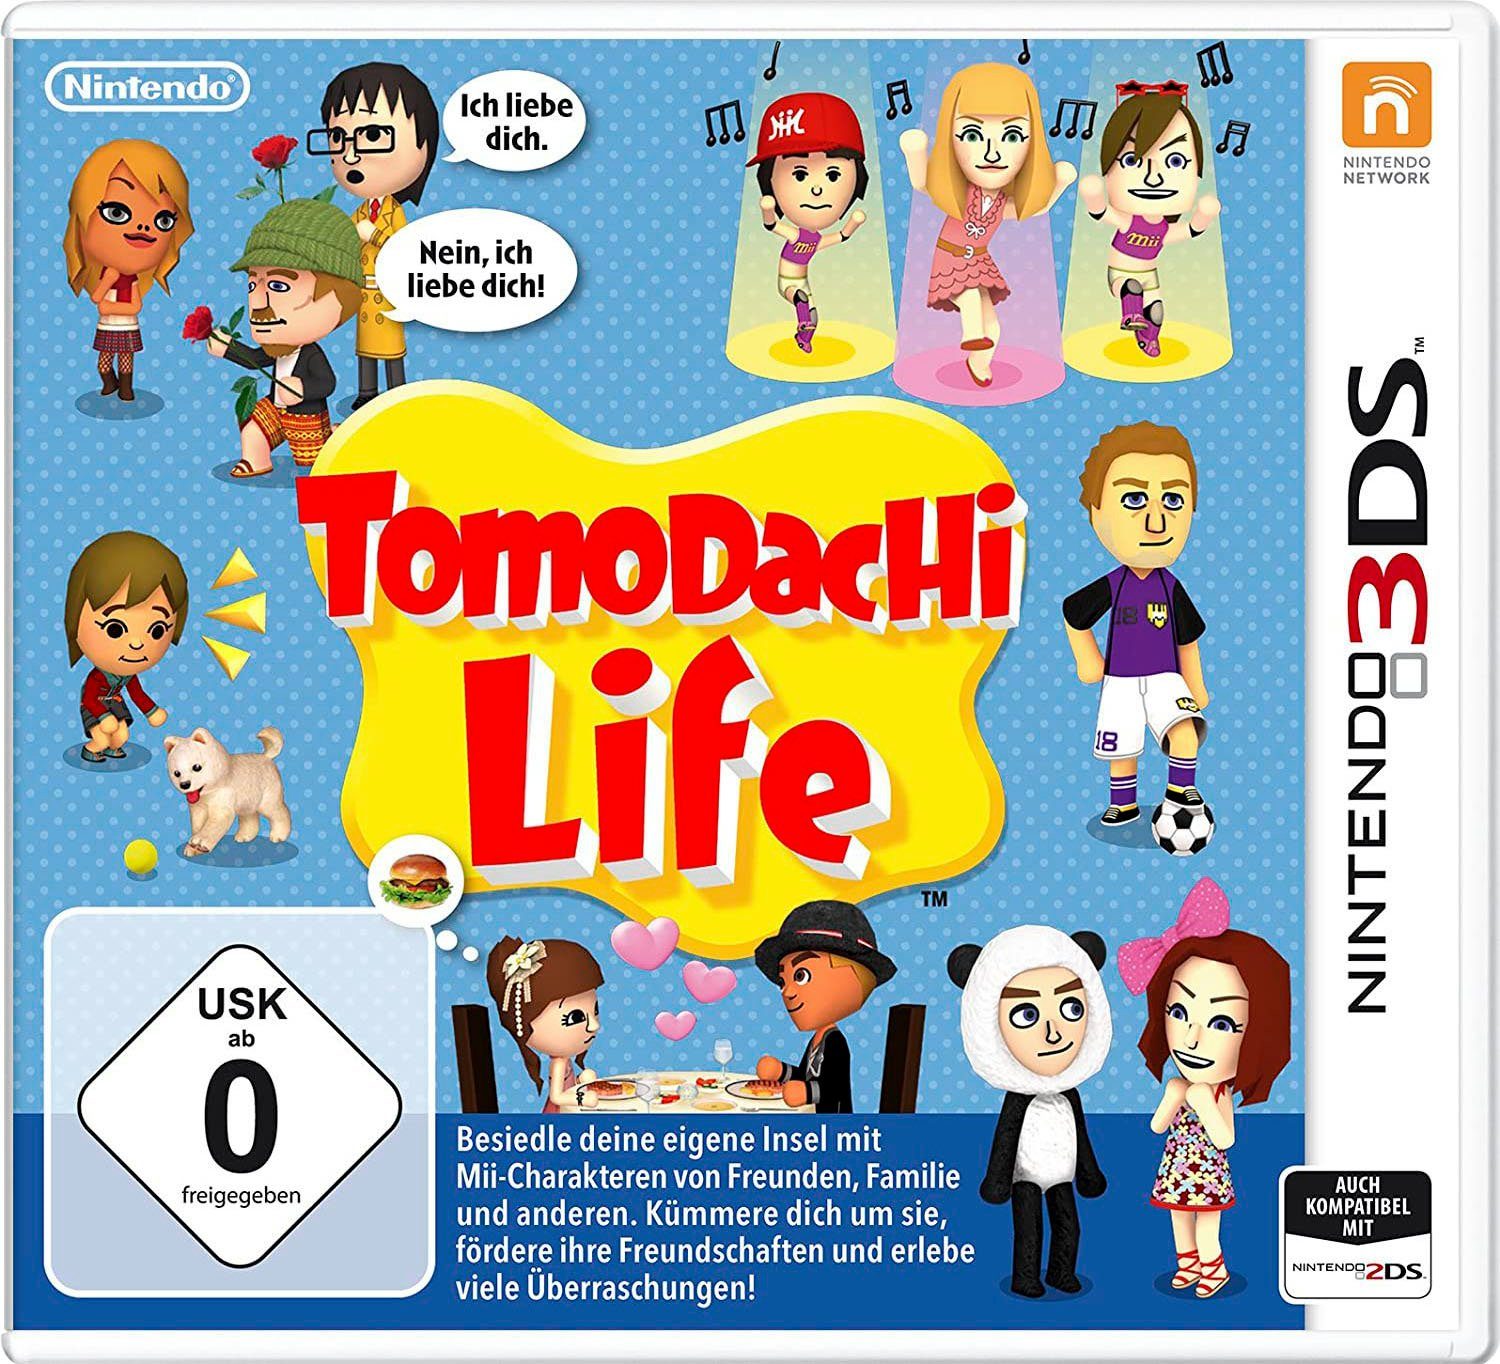 TOMODACHI 3DS Nintendo LIFE